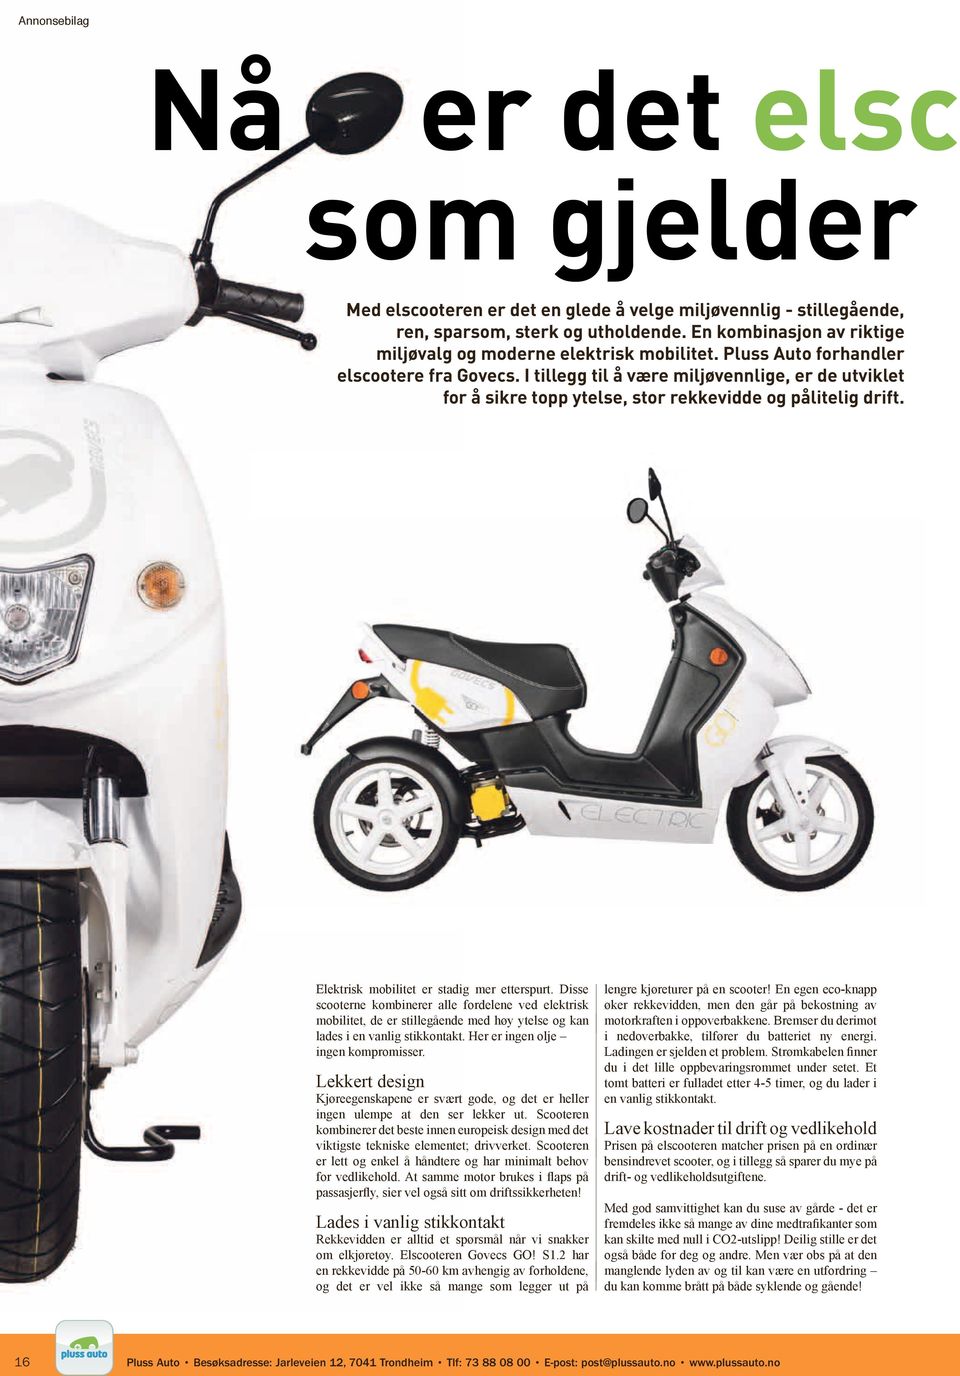 Elektrisk mobilitet er stadig mer etterspurt. Disse scooterne kombinerer alle fordelene ved elektrisk mobilitet, de er stillegående med høy ytelse og kan lades i en vanlig stikkontakt.